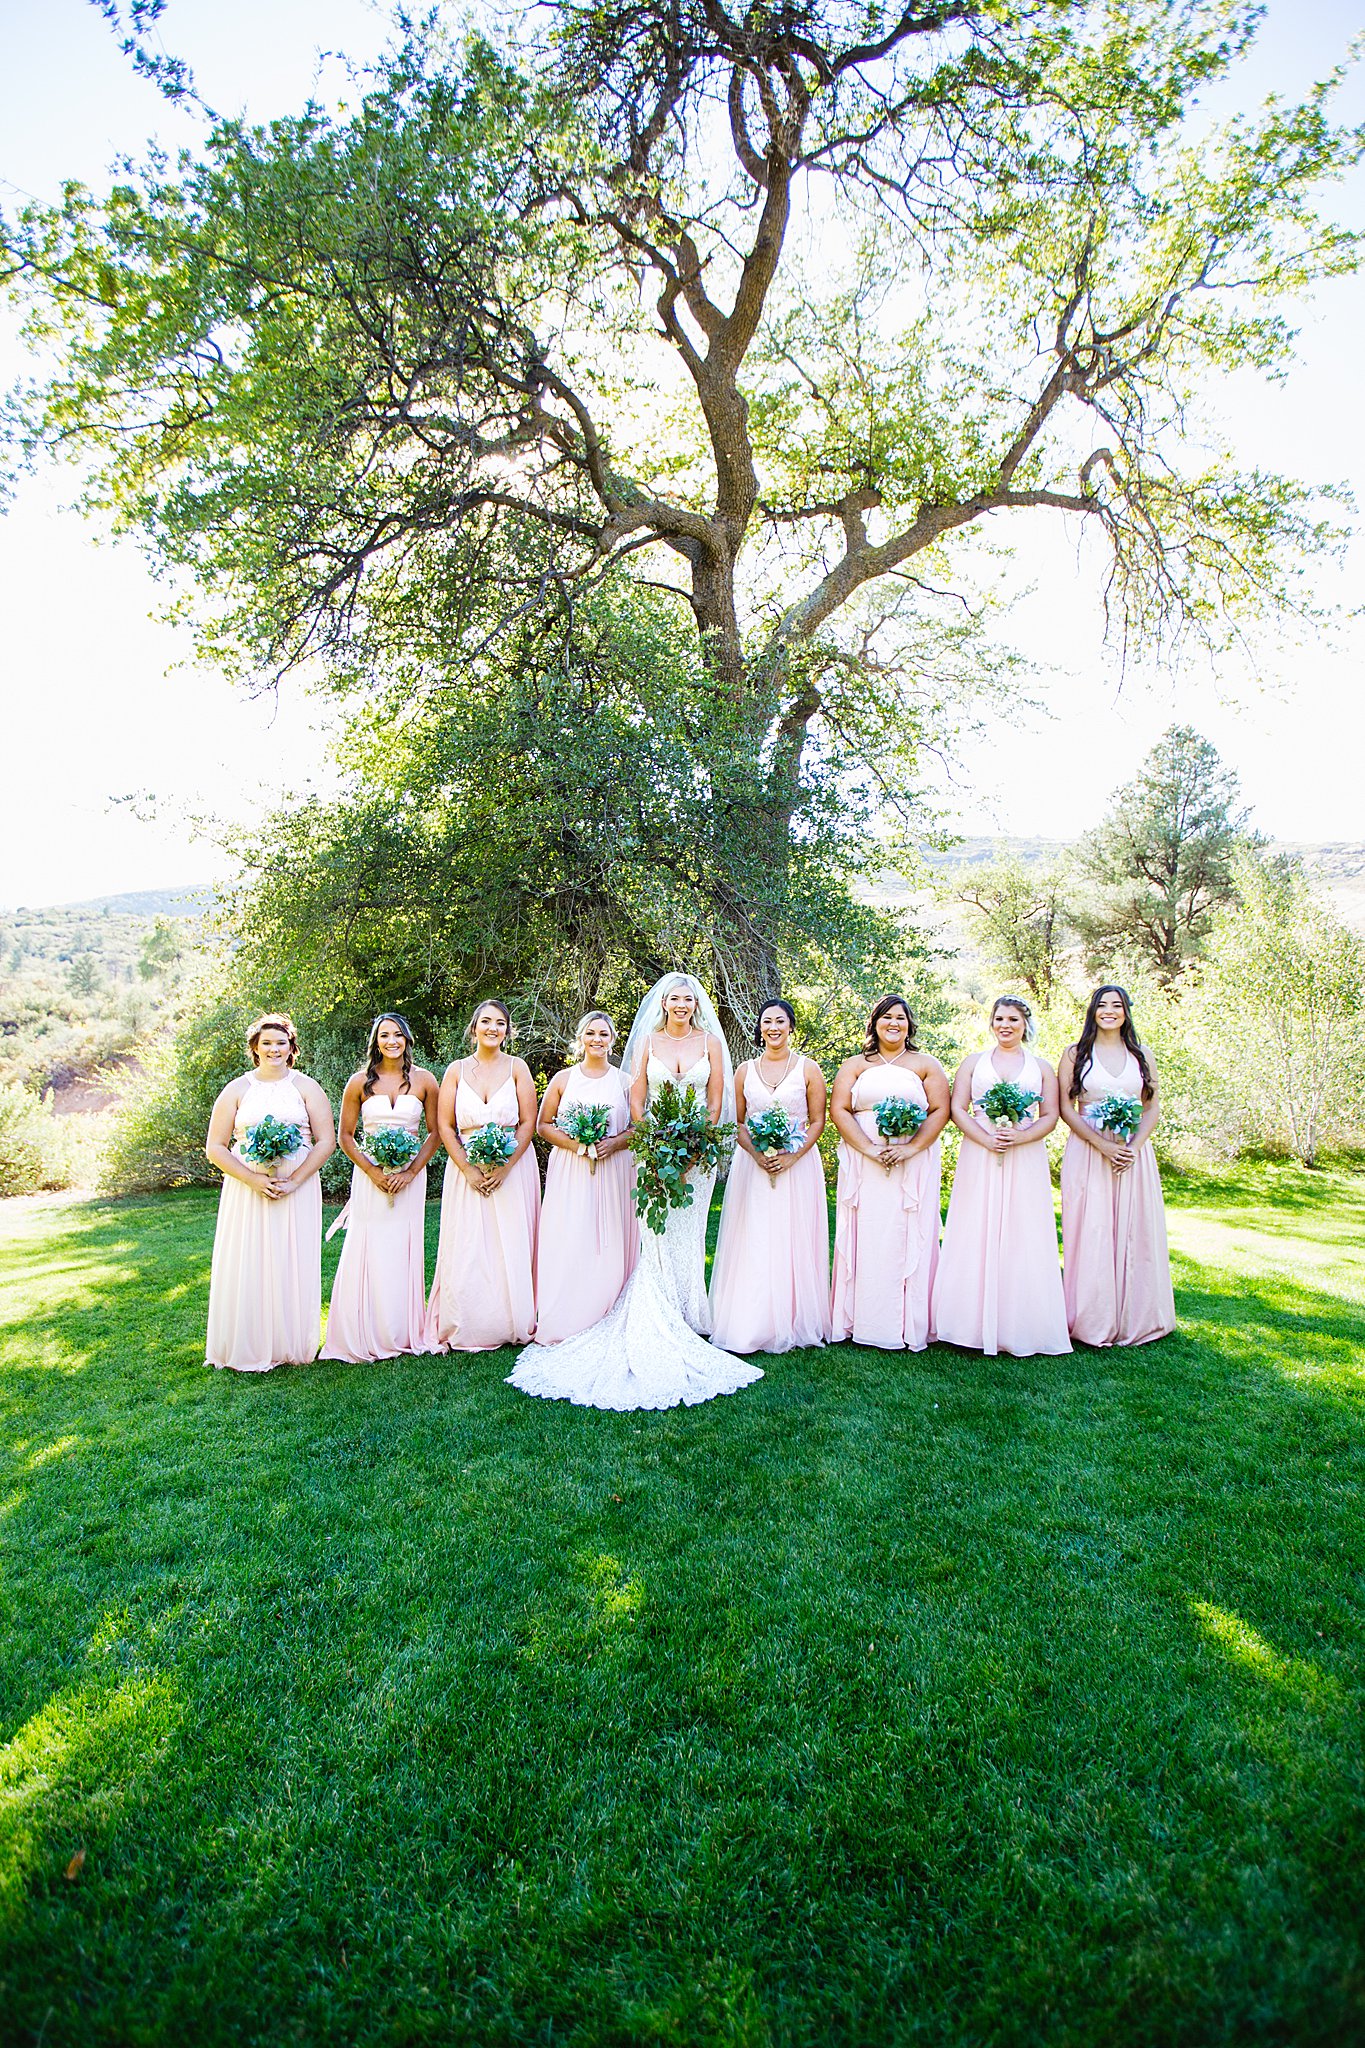 Bride and bridesmaids together at a Van Dickson Ranch wedding by Arizona wedding photographer PMA Photography.